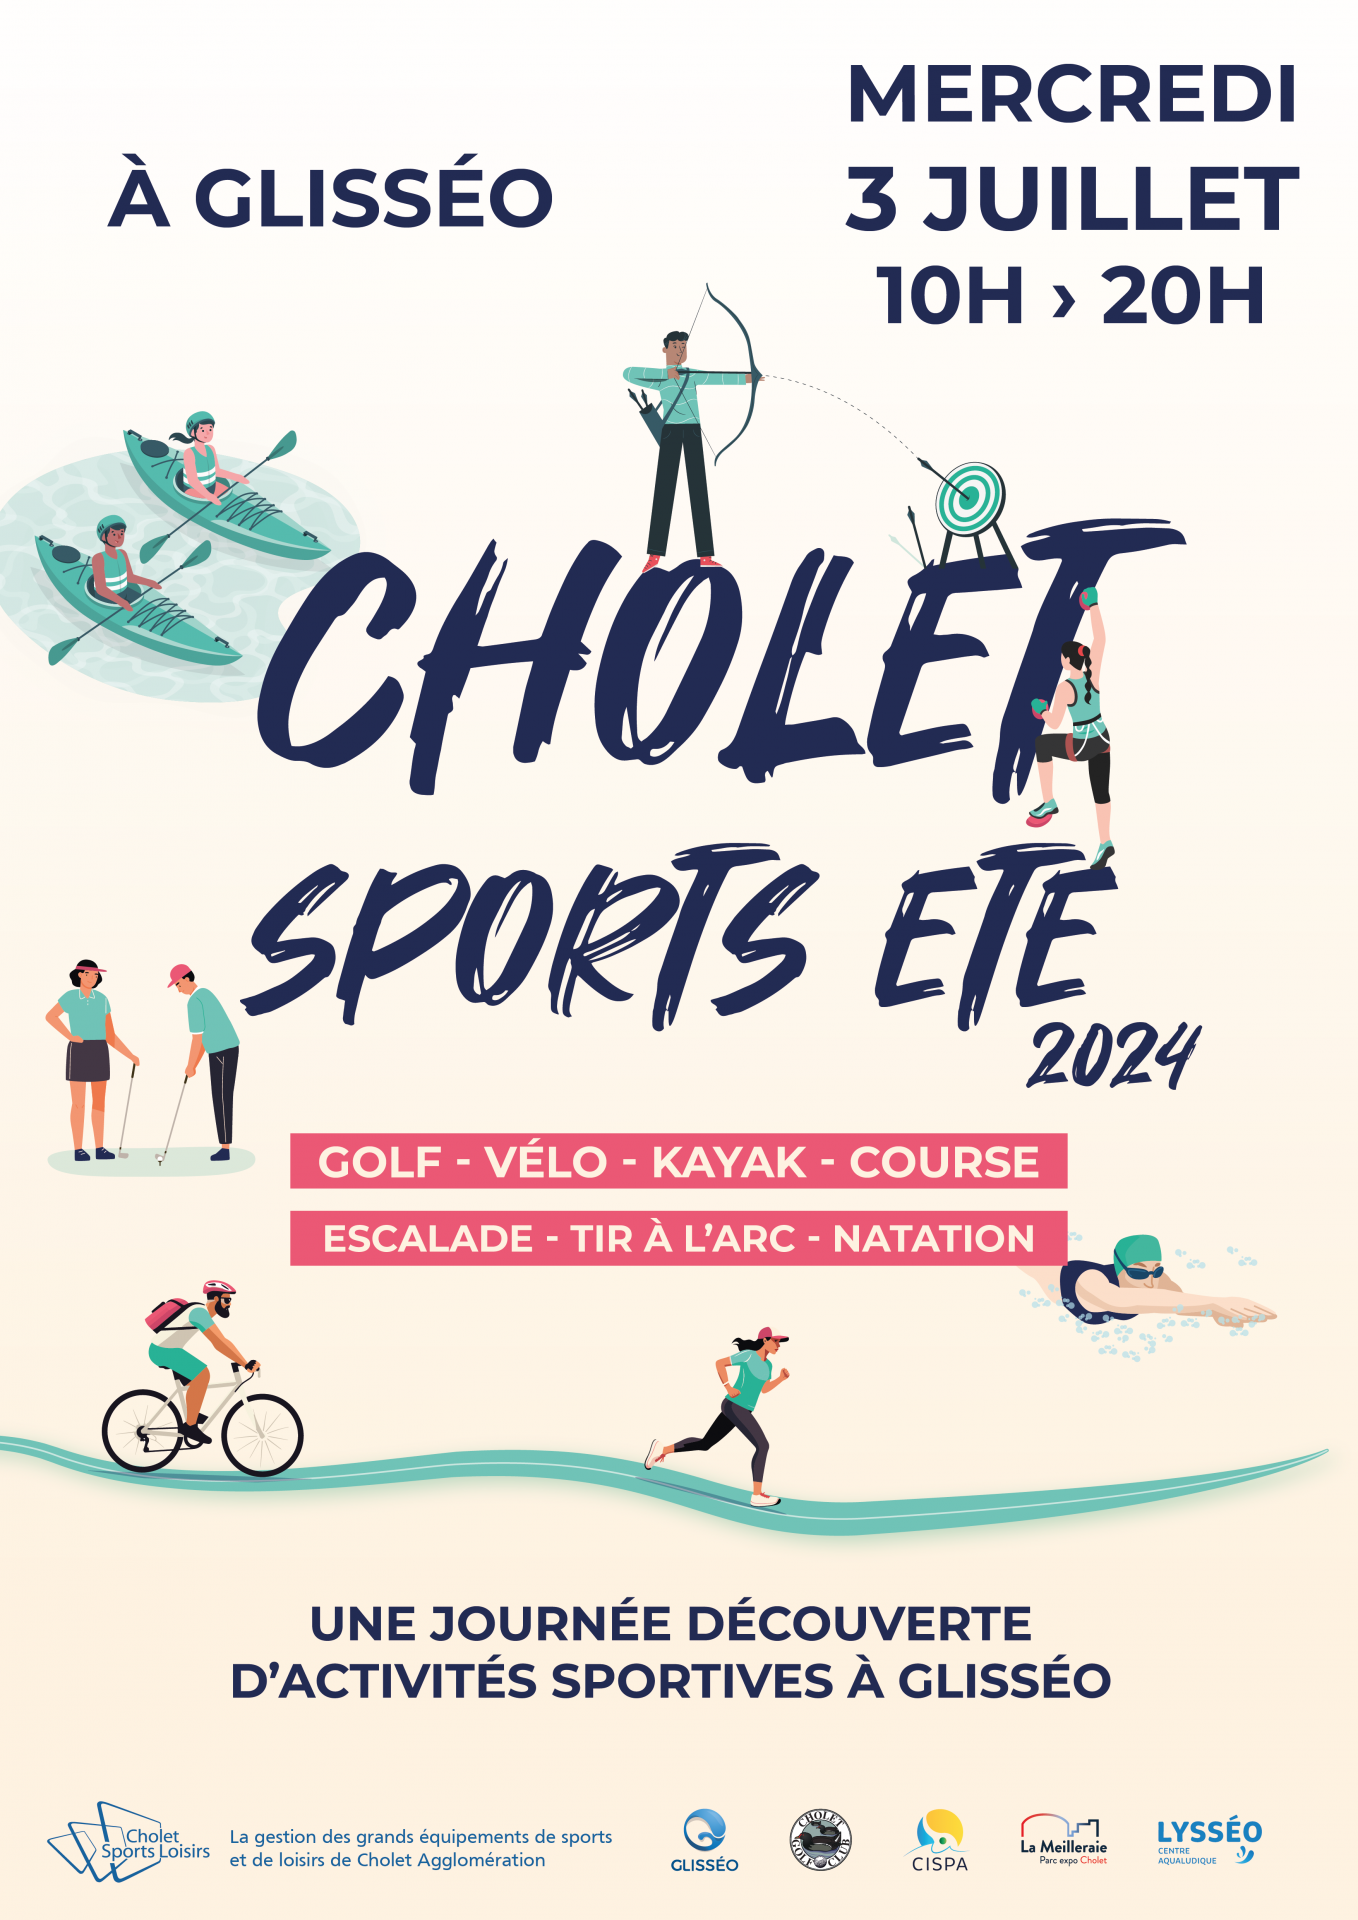 Cholet Sports Eté agenda manifestation glisseo